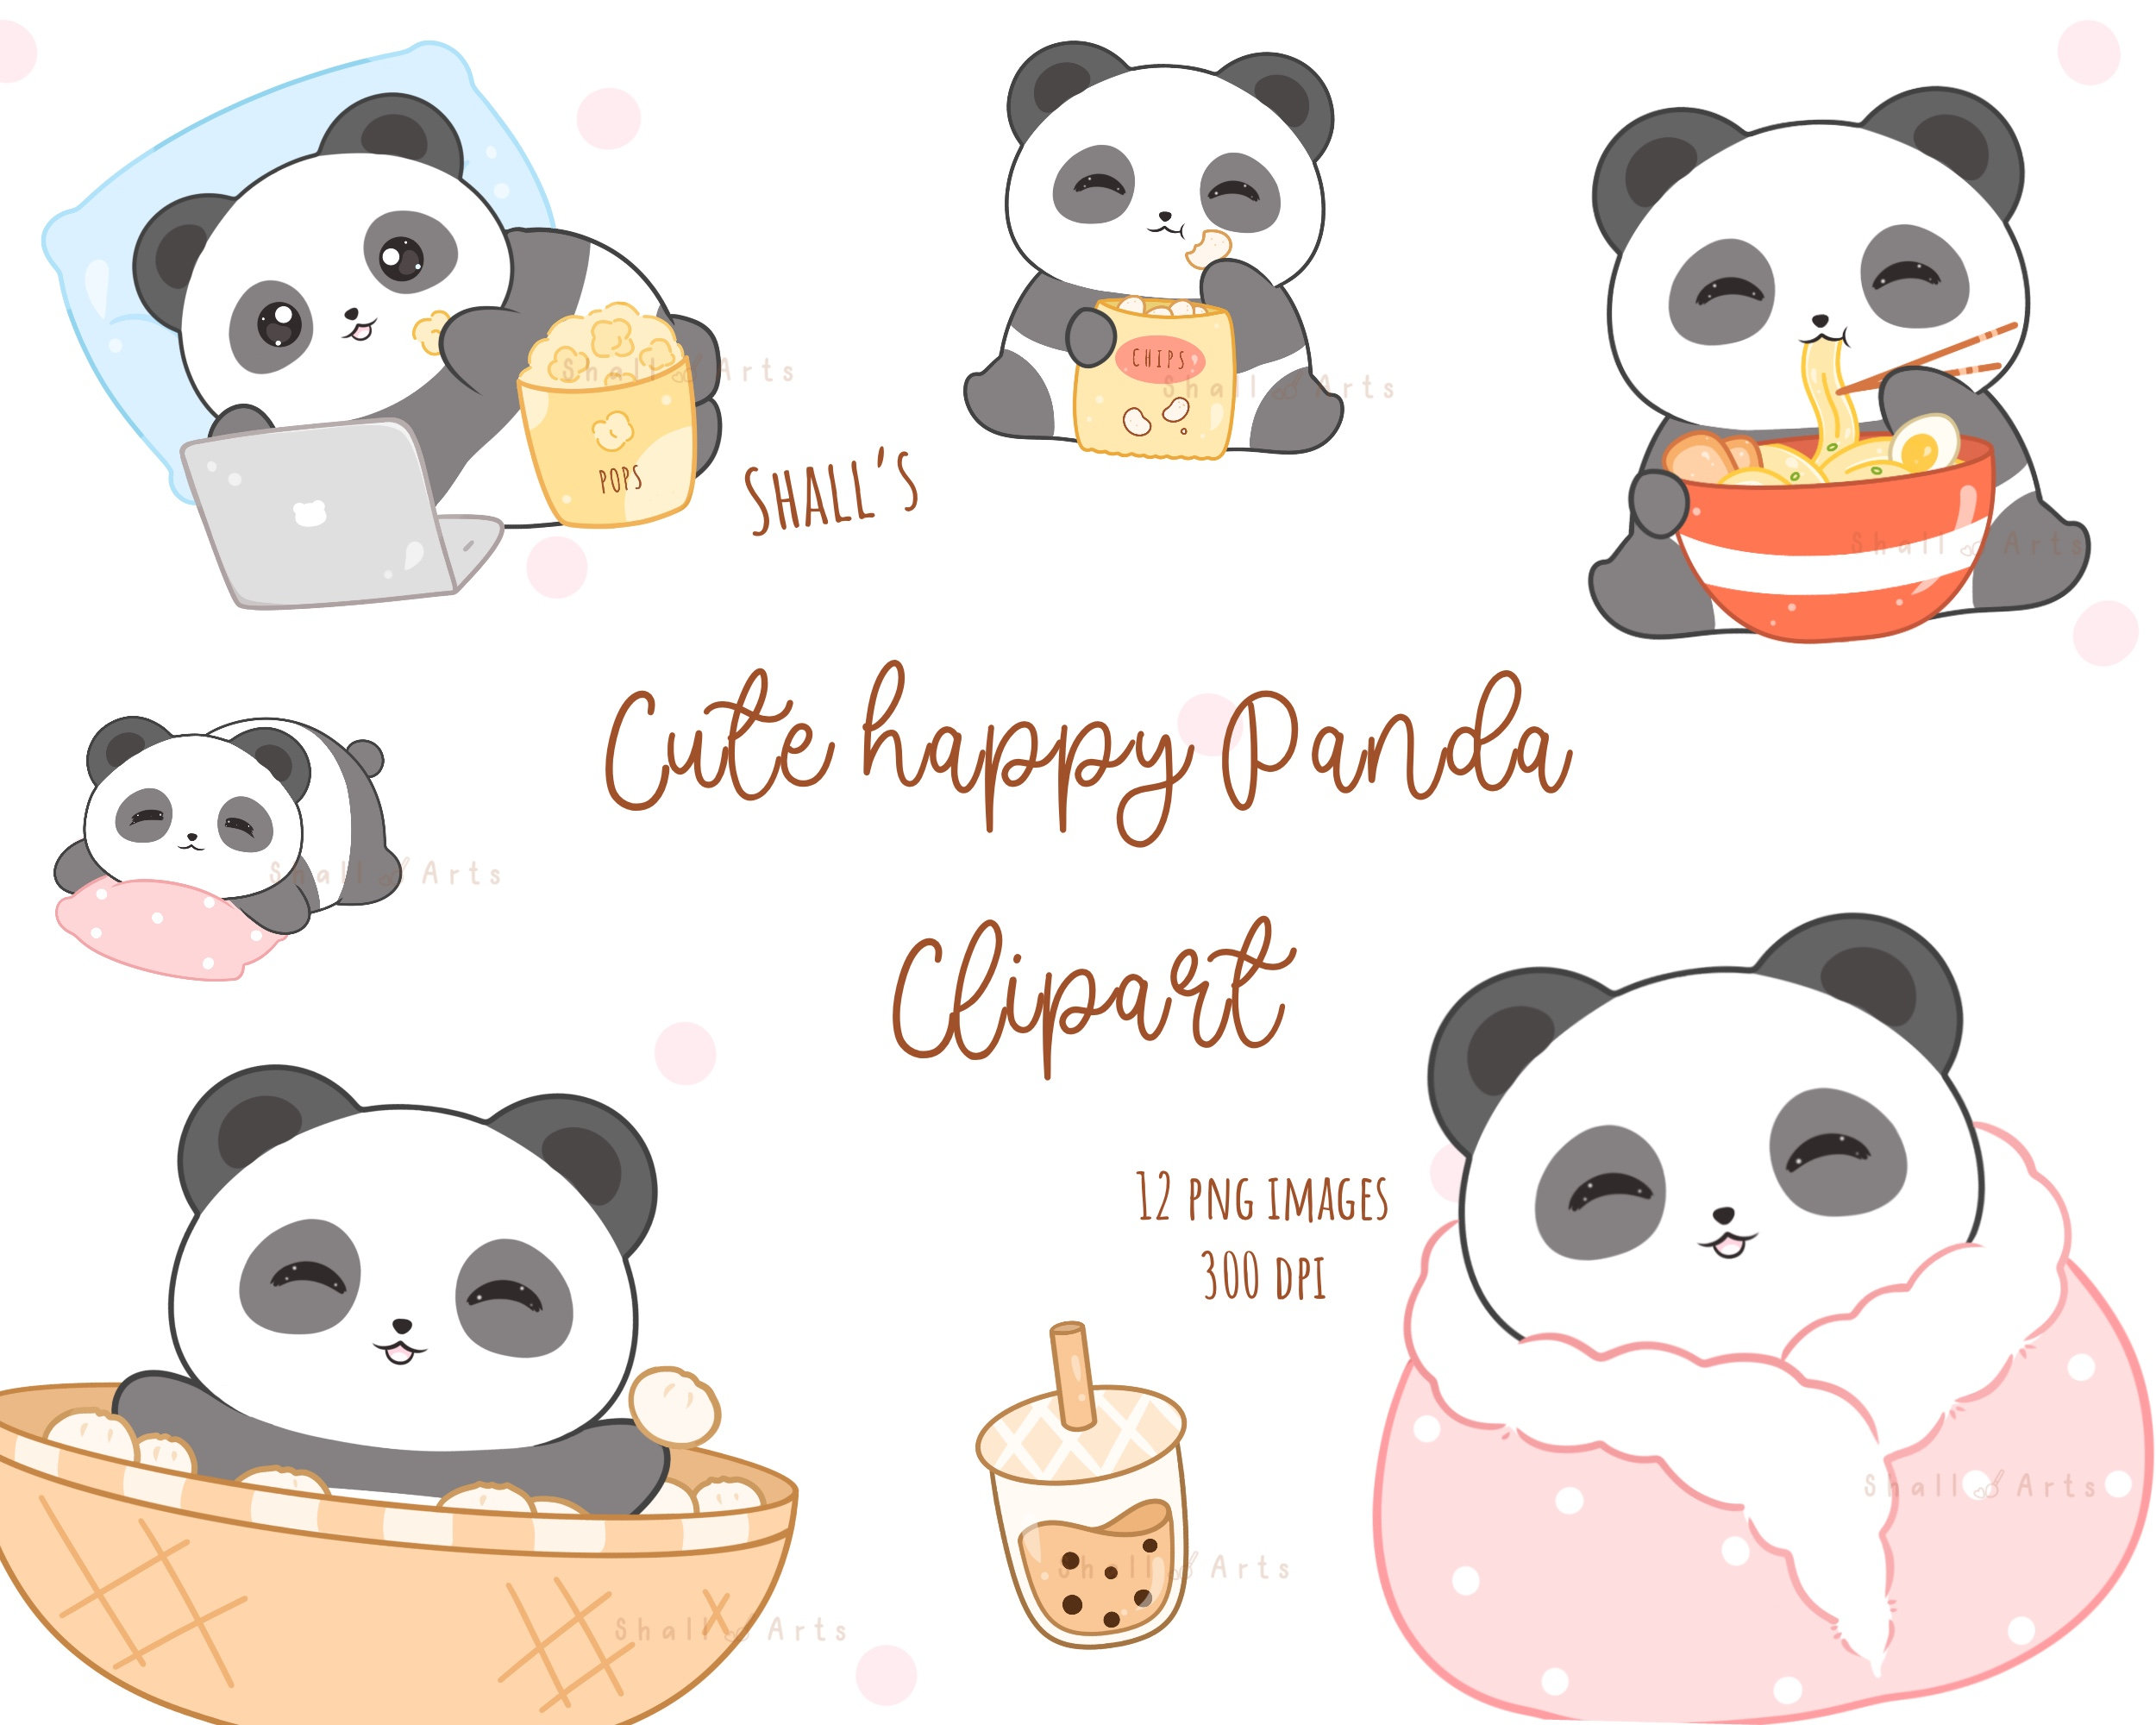 Cute Pandas Clip Art, Panda Clip Art, Panda Clipart, Cute Panda Clipart,  Kawaii Panda, Kawaii Clipart - pnd01